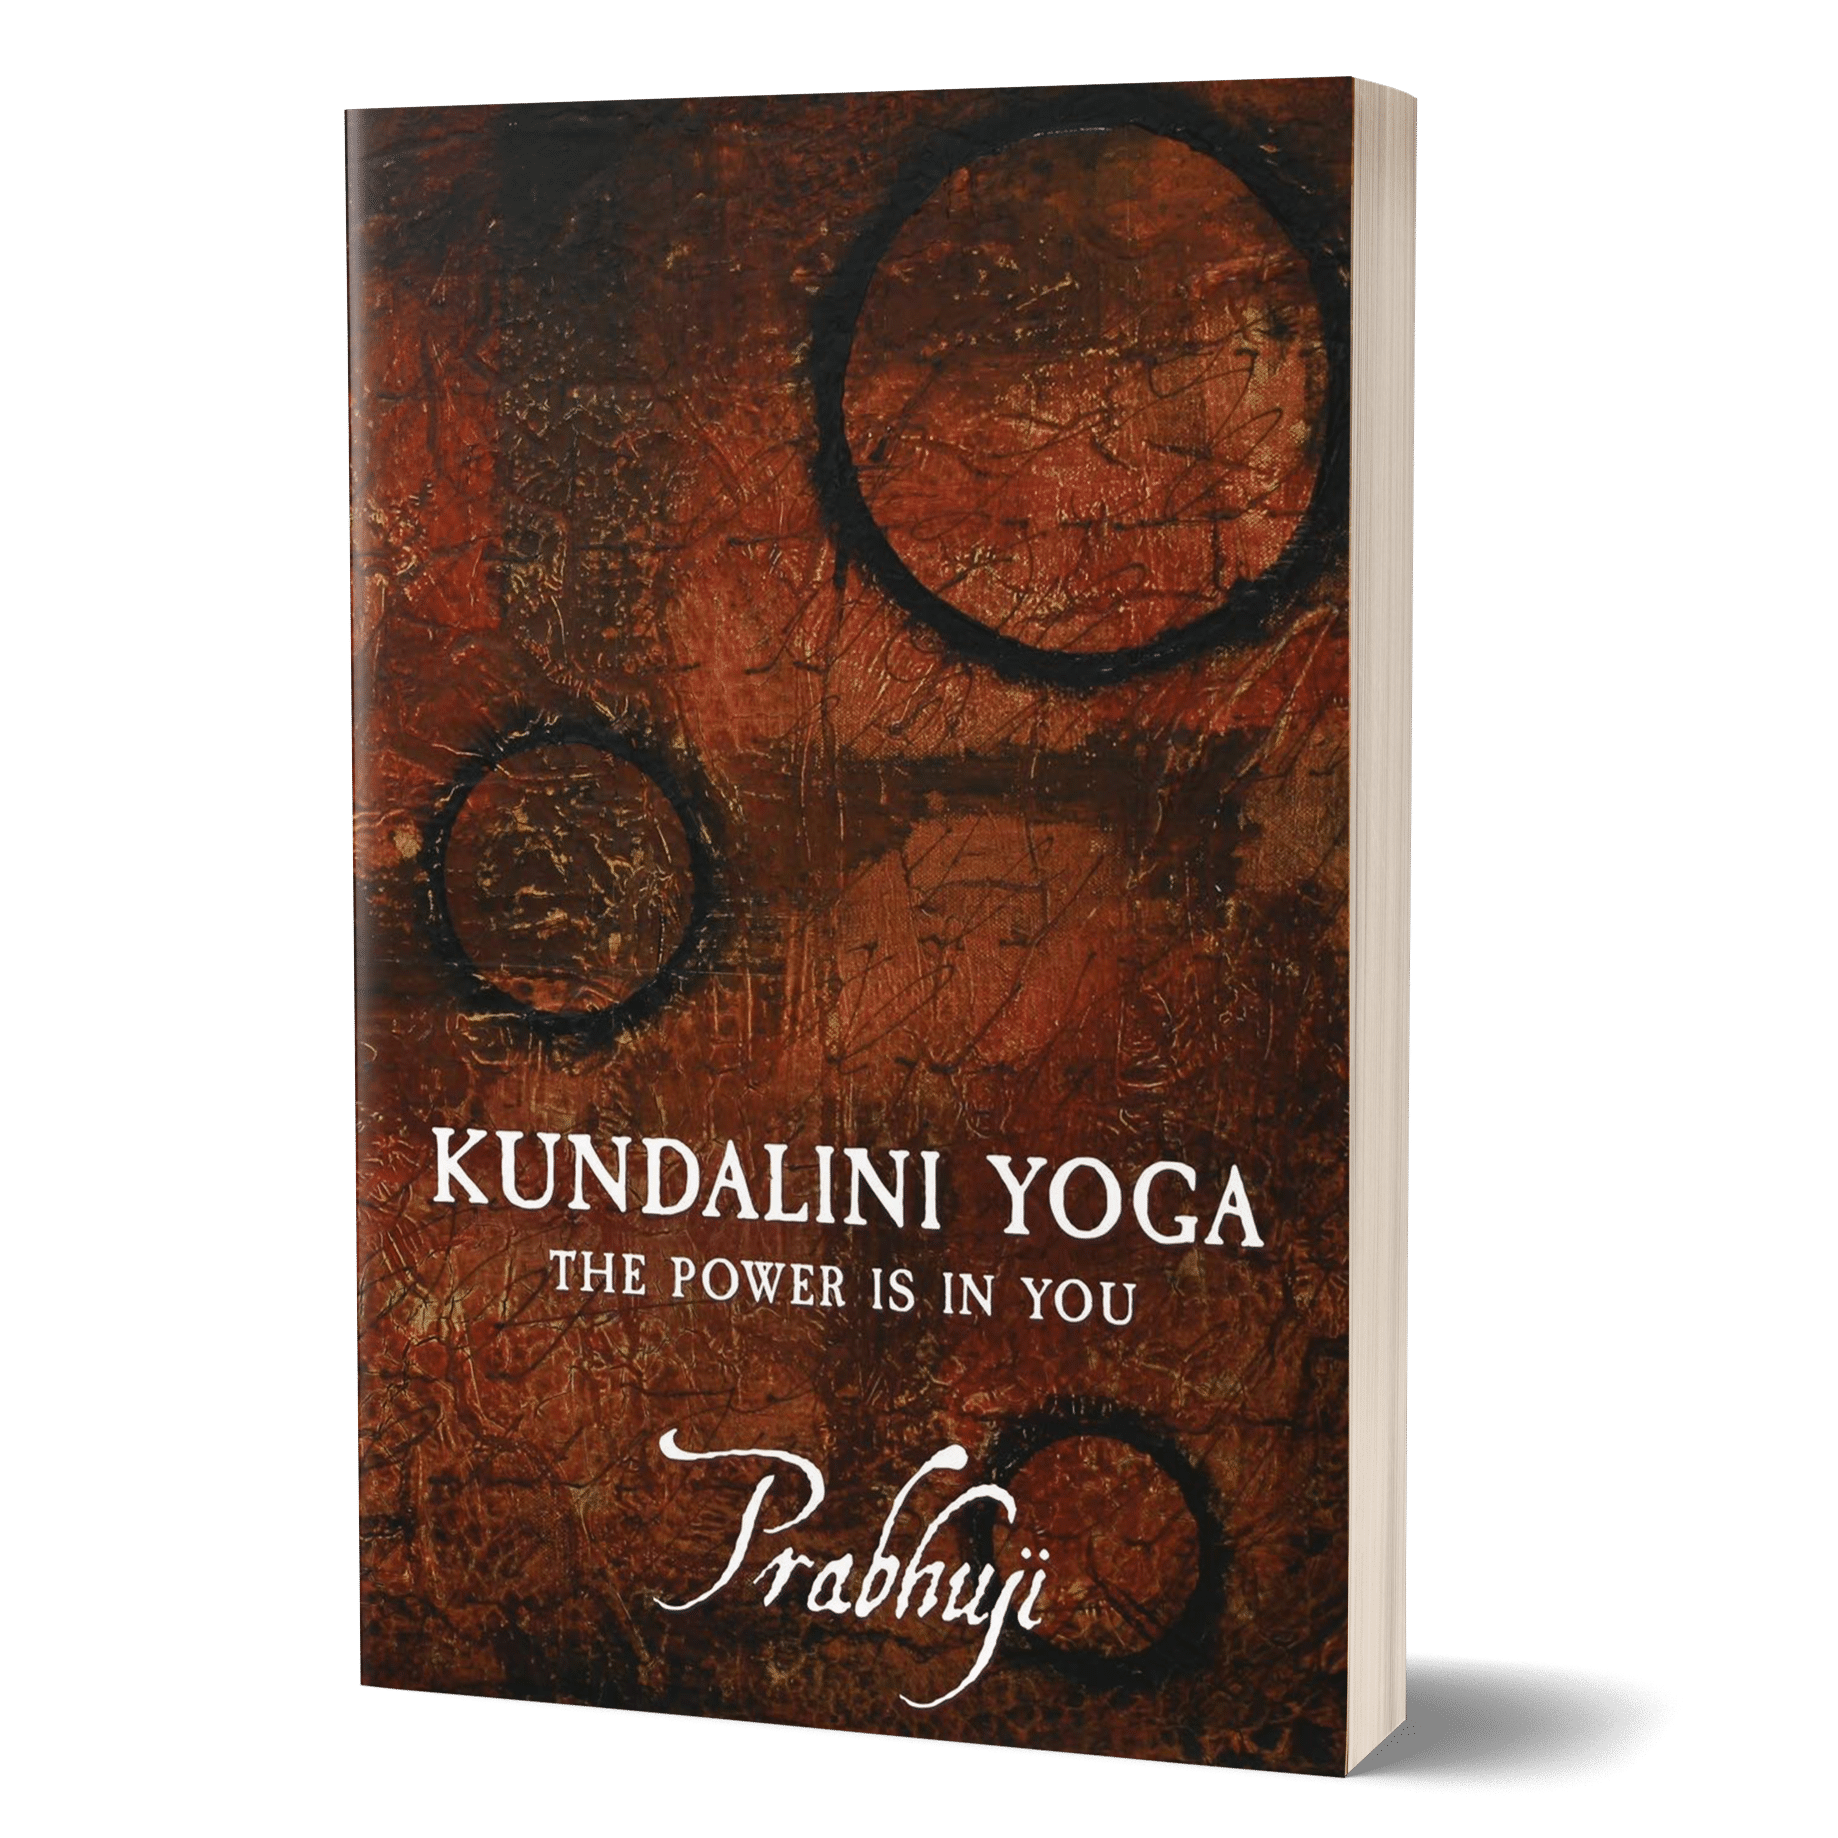 Kundalini yoga: The power is in you - Avadhutashram